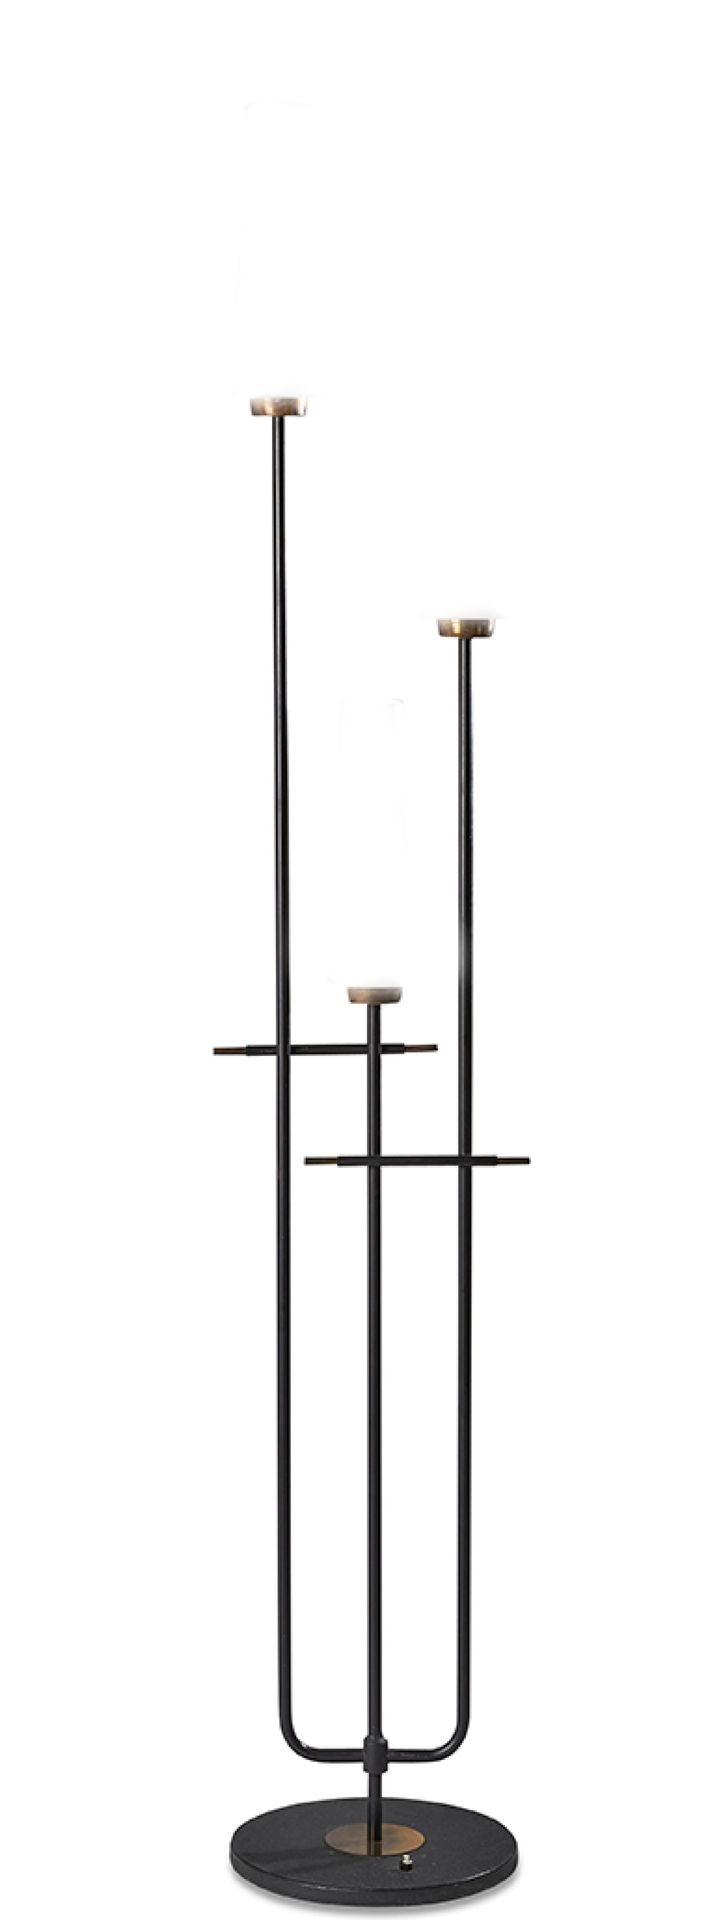 Null 归属于Lunel的作品

黑色漆面金属落地灯，有三个分支。

高度：164厘米。